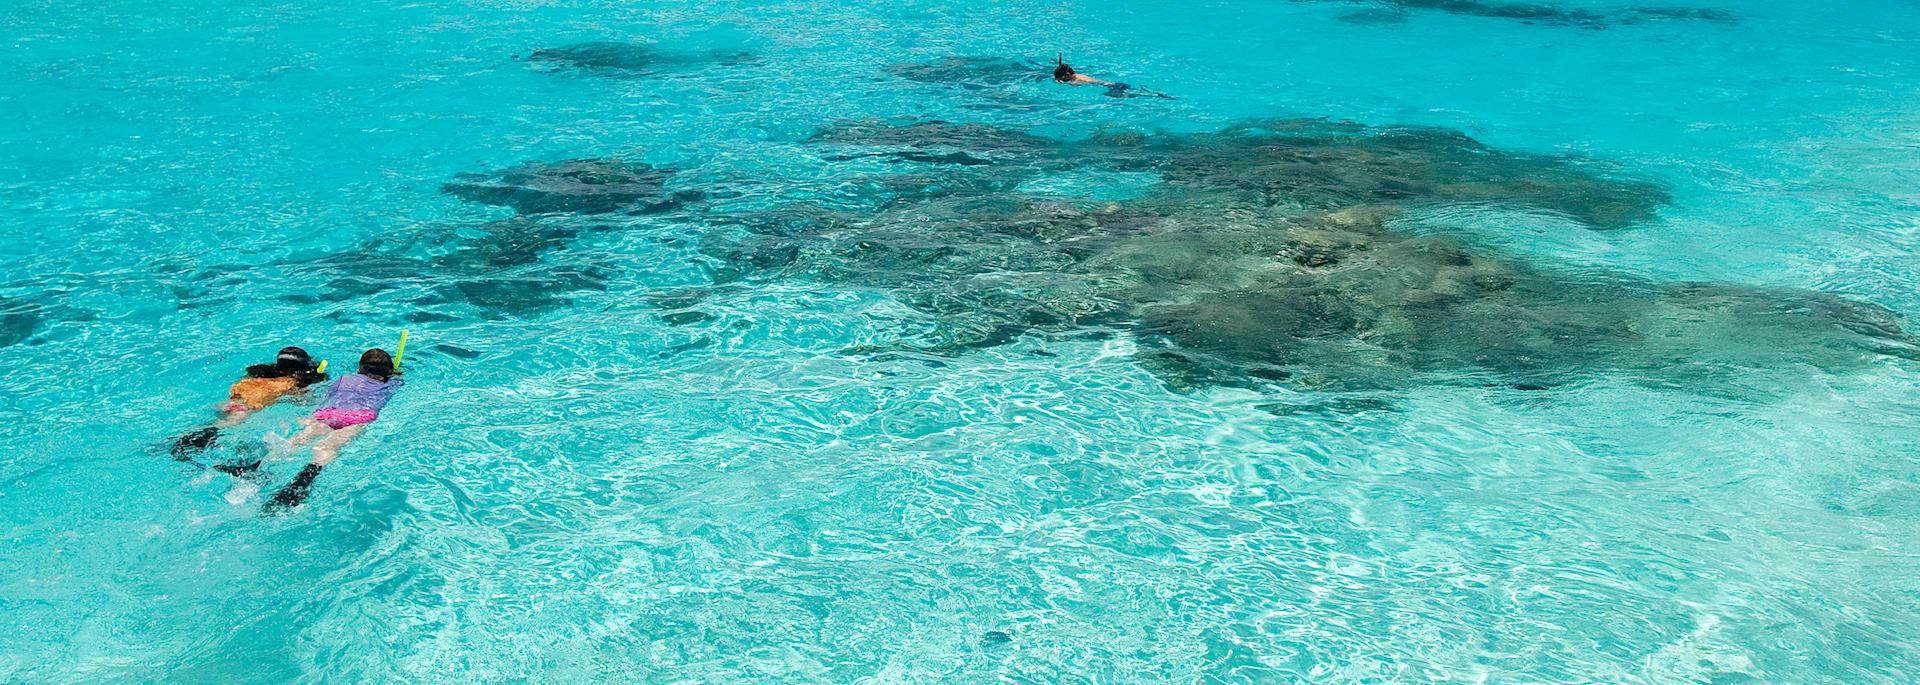 Snorkelling in Aitutaki Lagoon